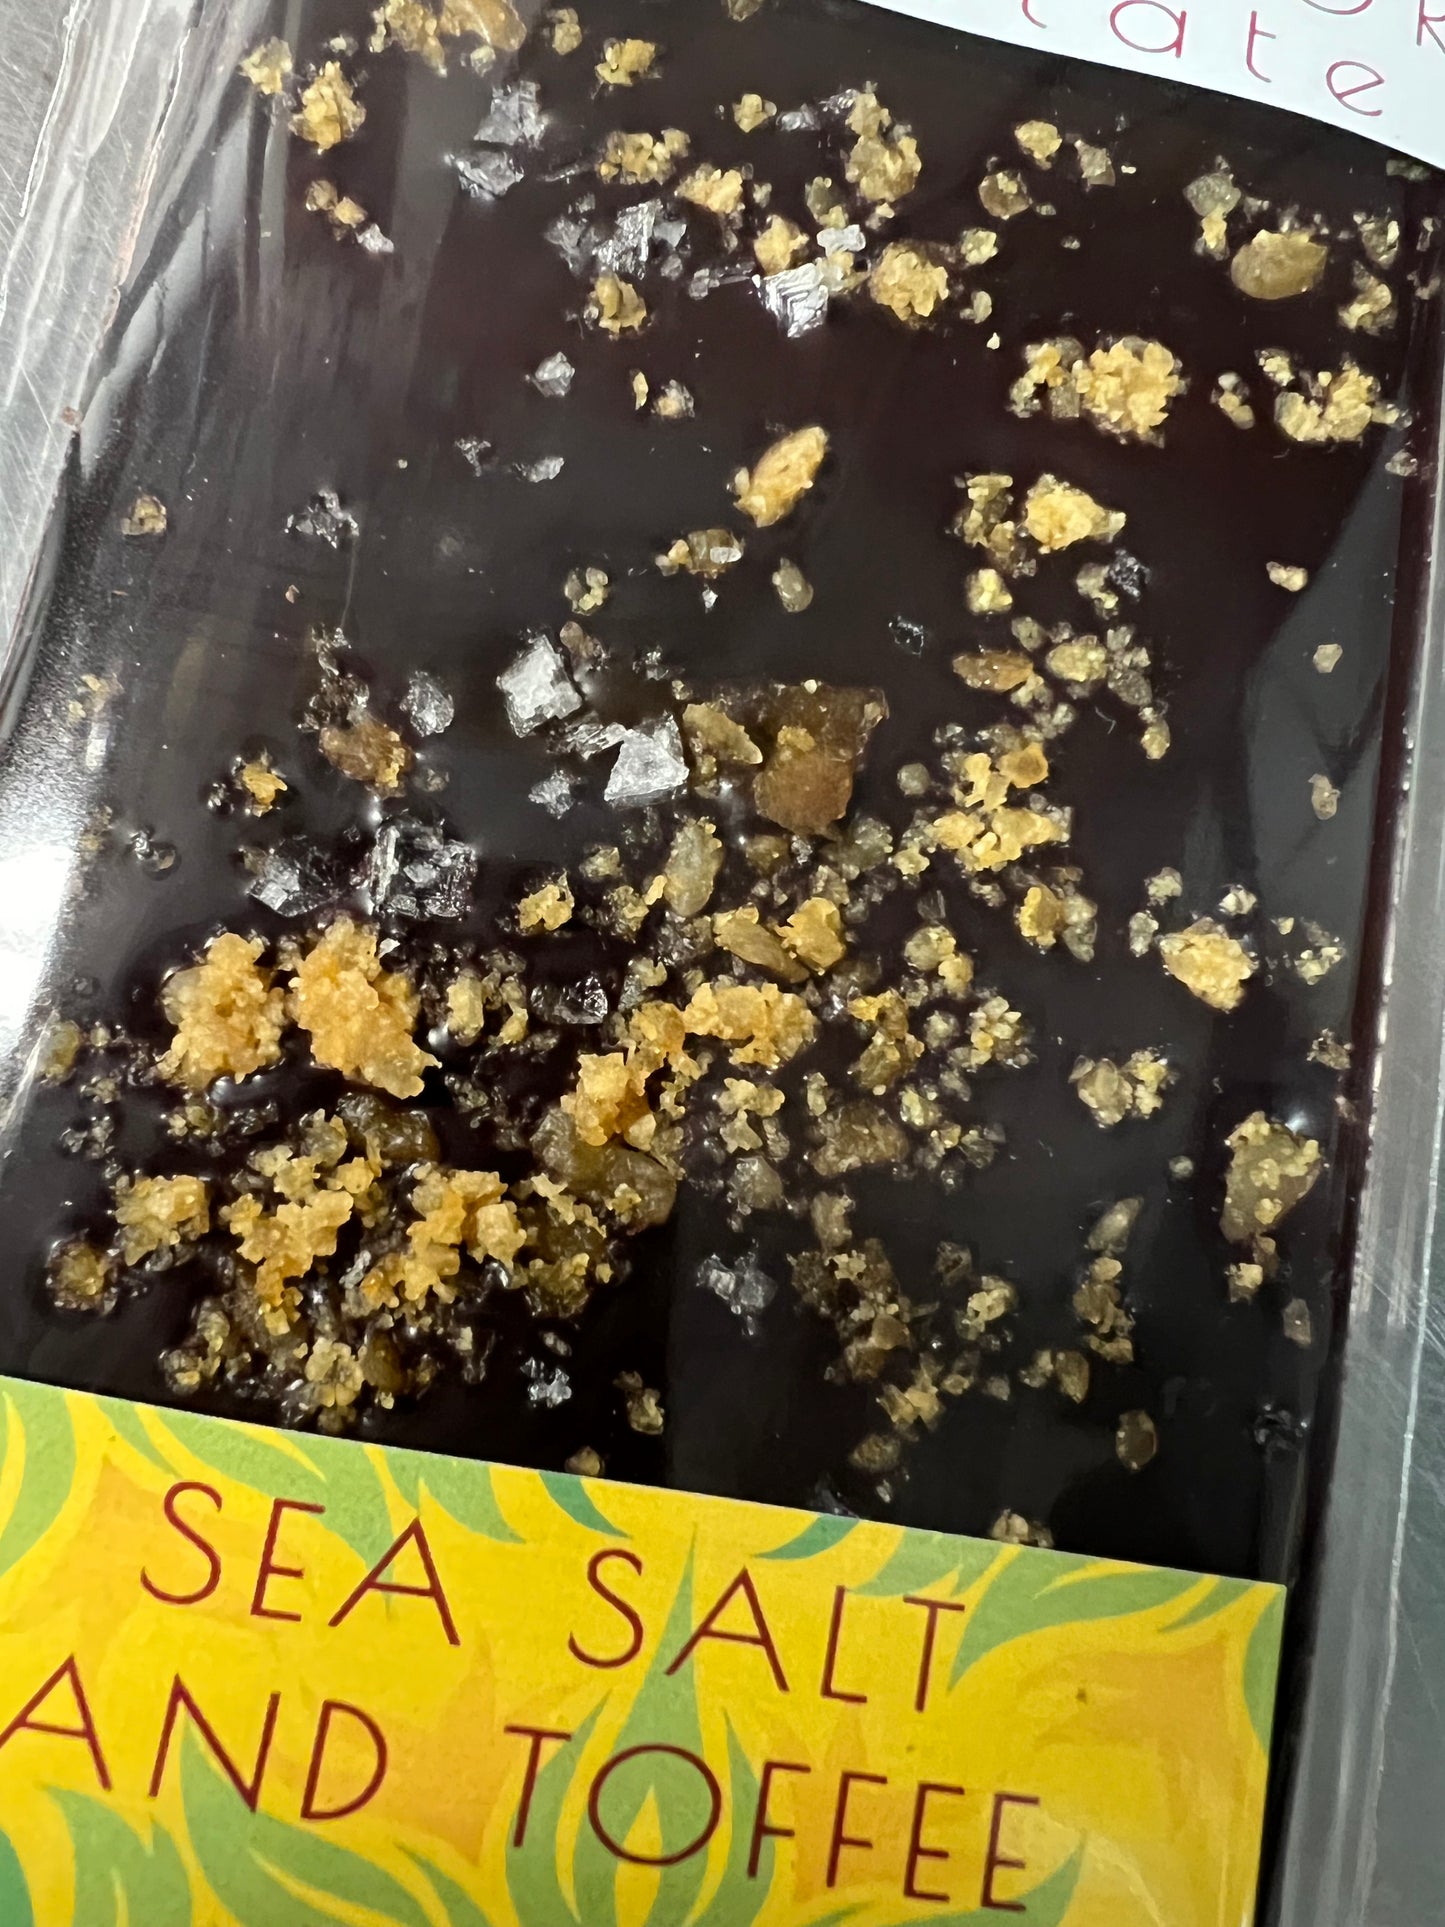 Sea Salt and Toffee bar